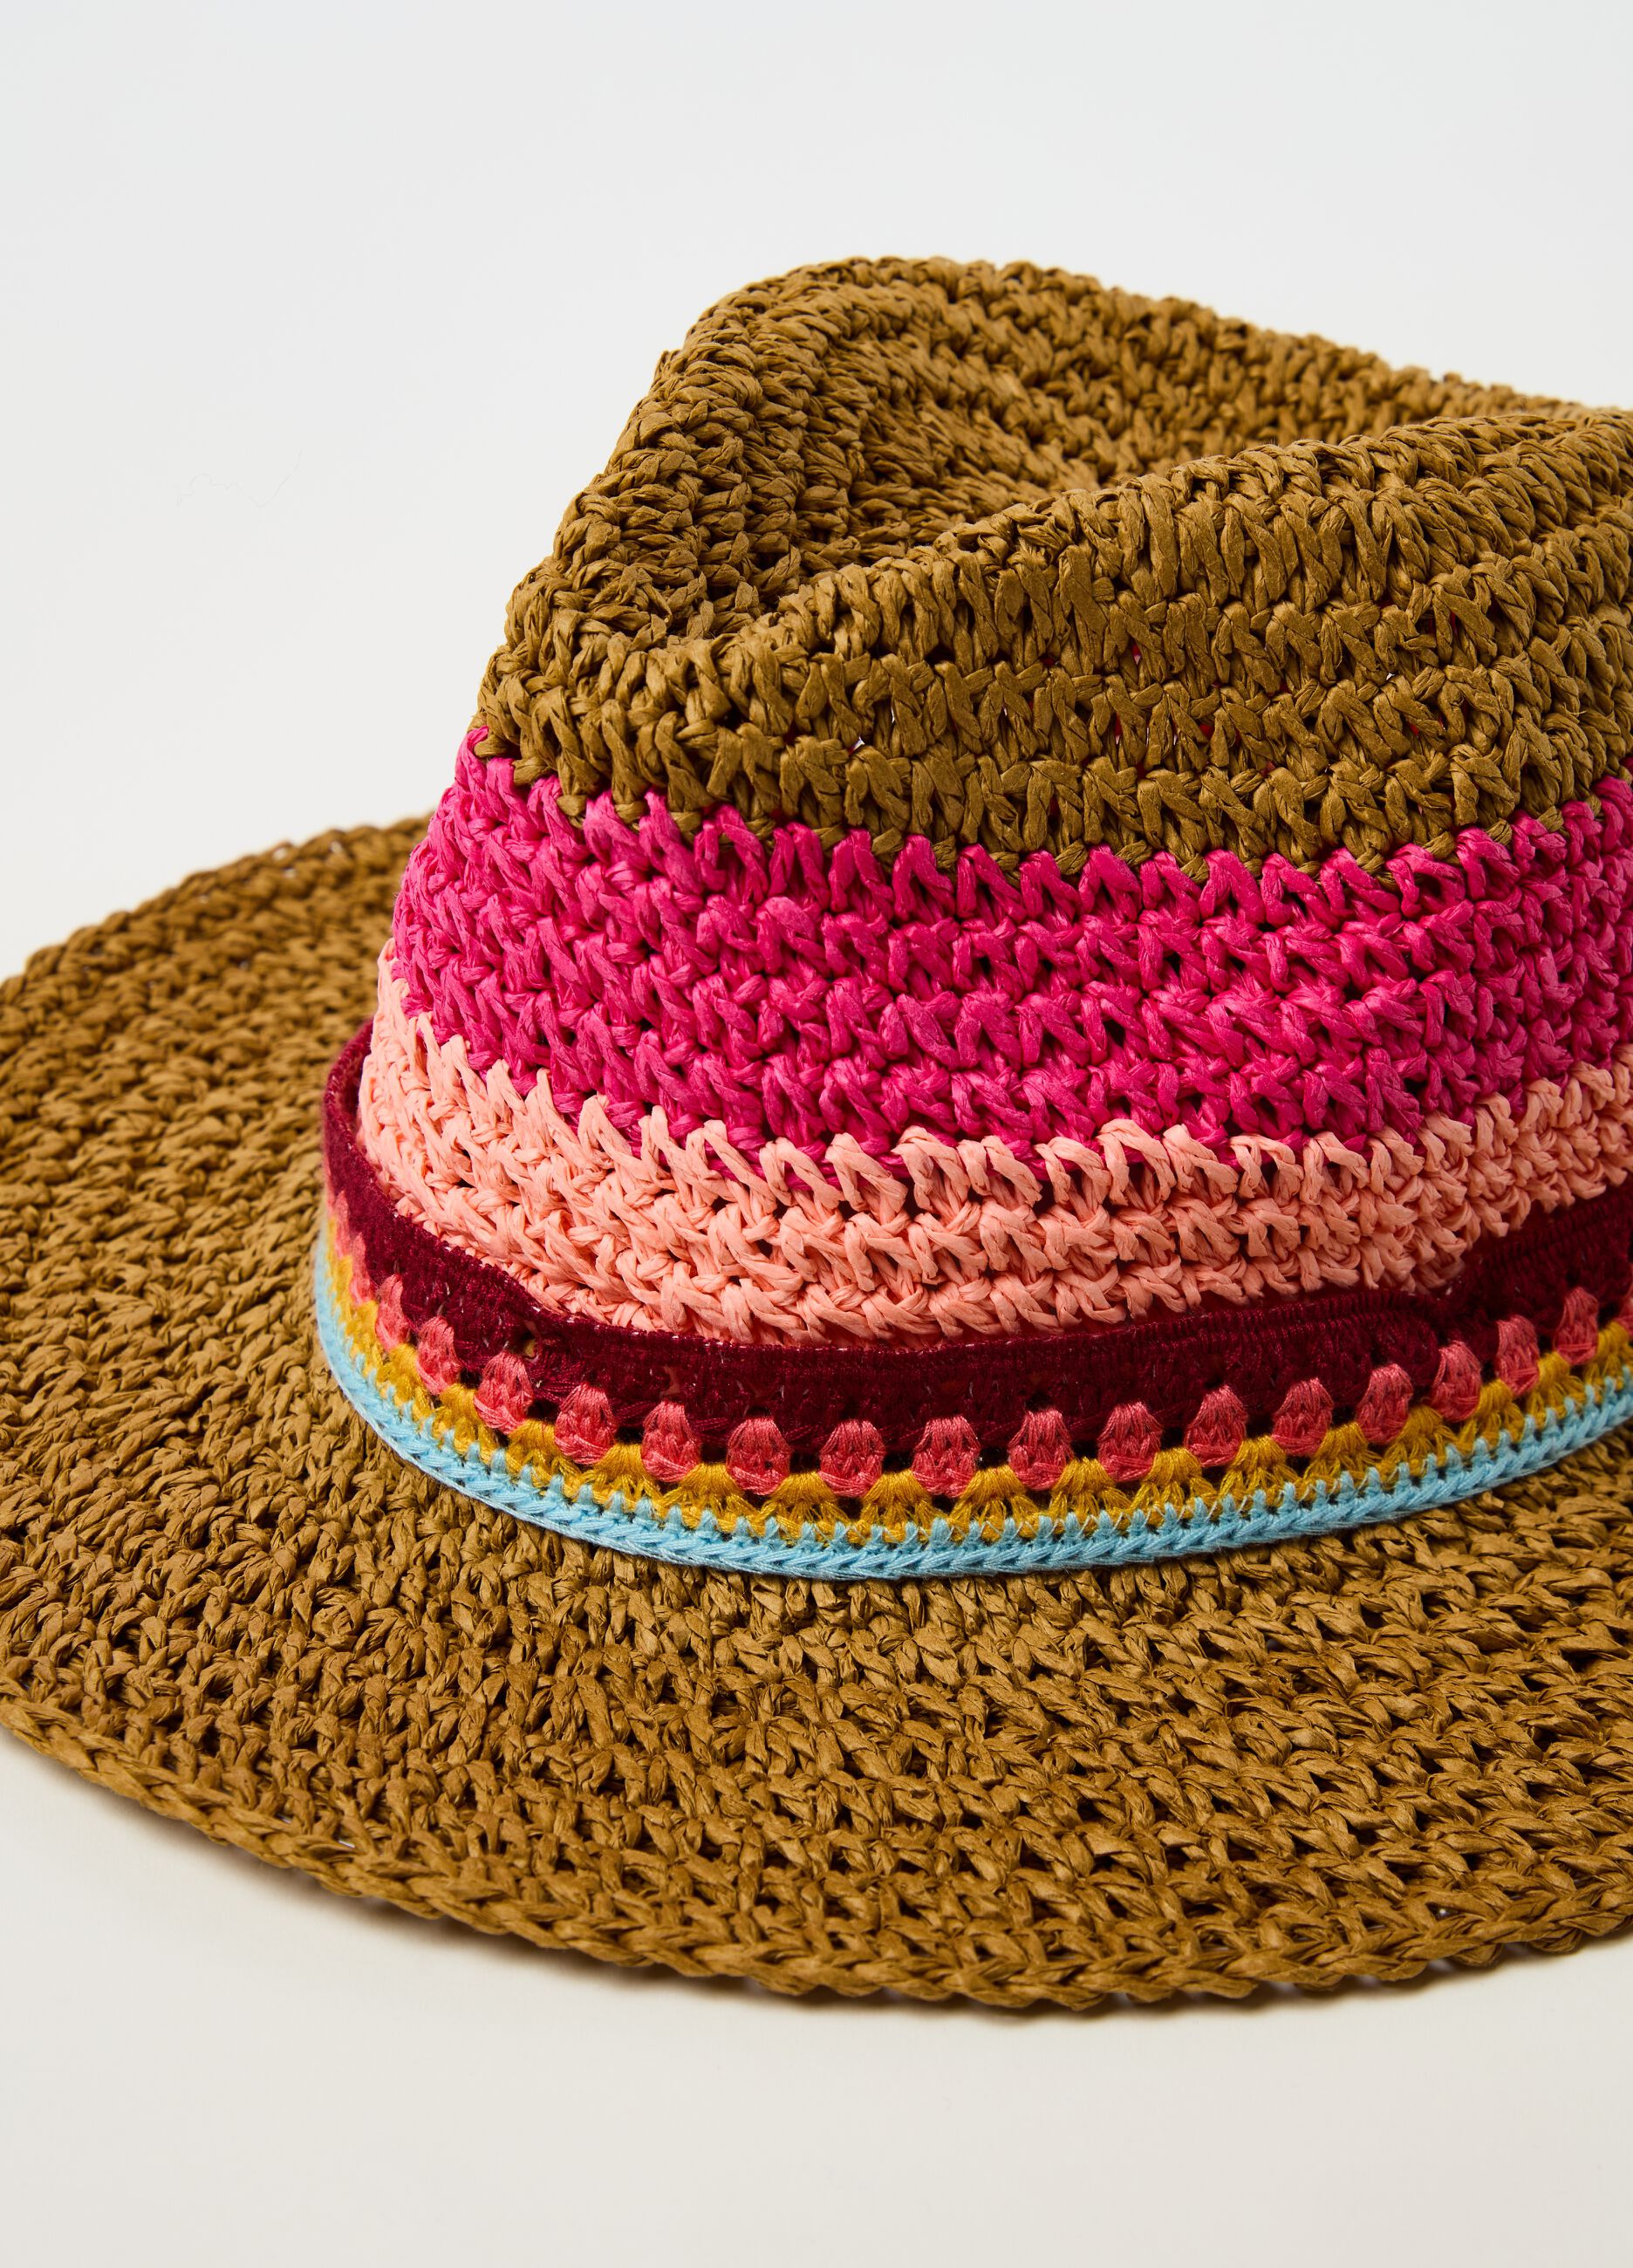 Straw hat with crochet ribbon